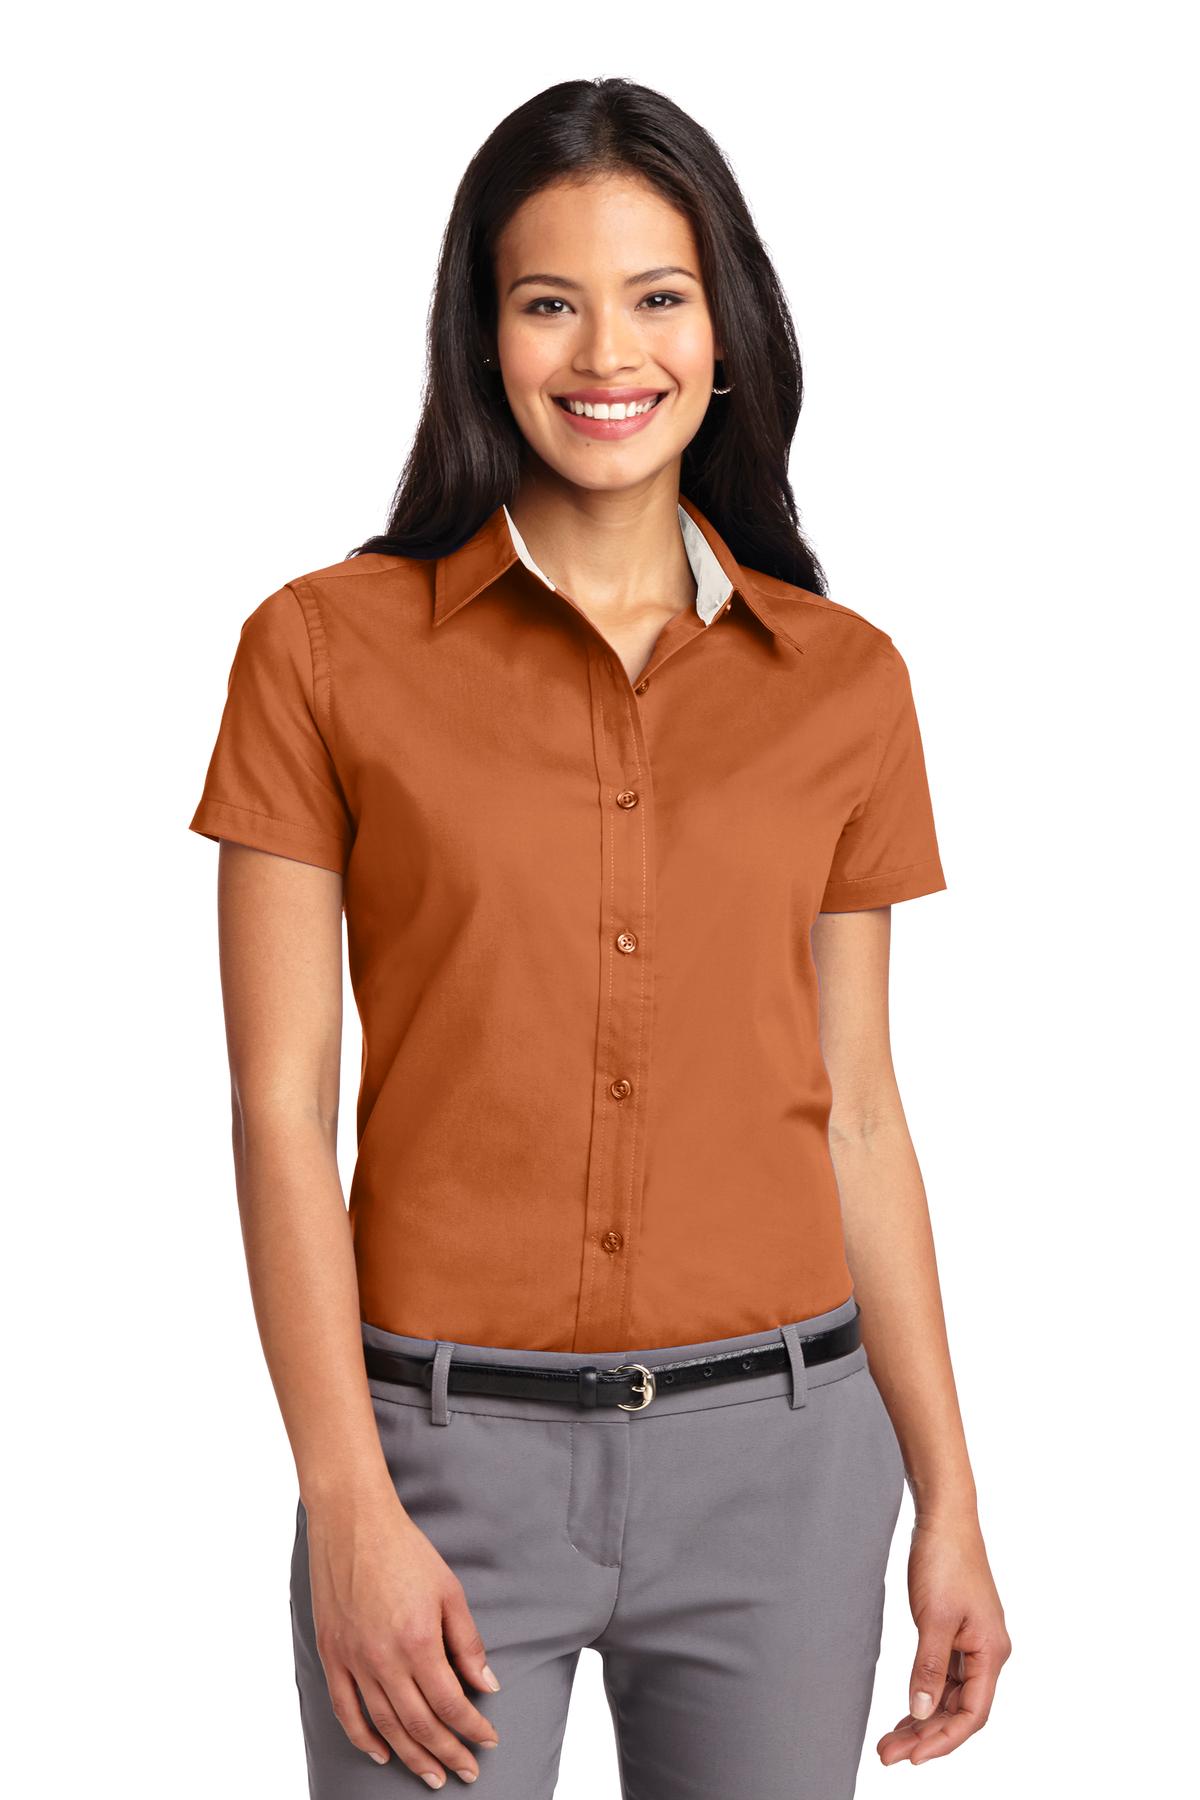 Port Authority Ladies Short Sleeve Easy Care Shirt-XS (Texas Orange/Light Stone) - image 1 of 6